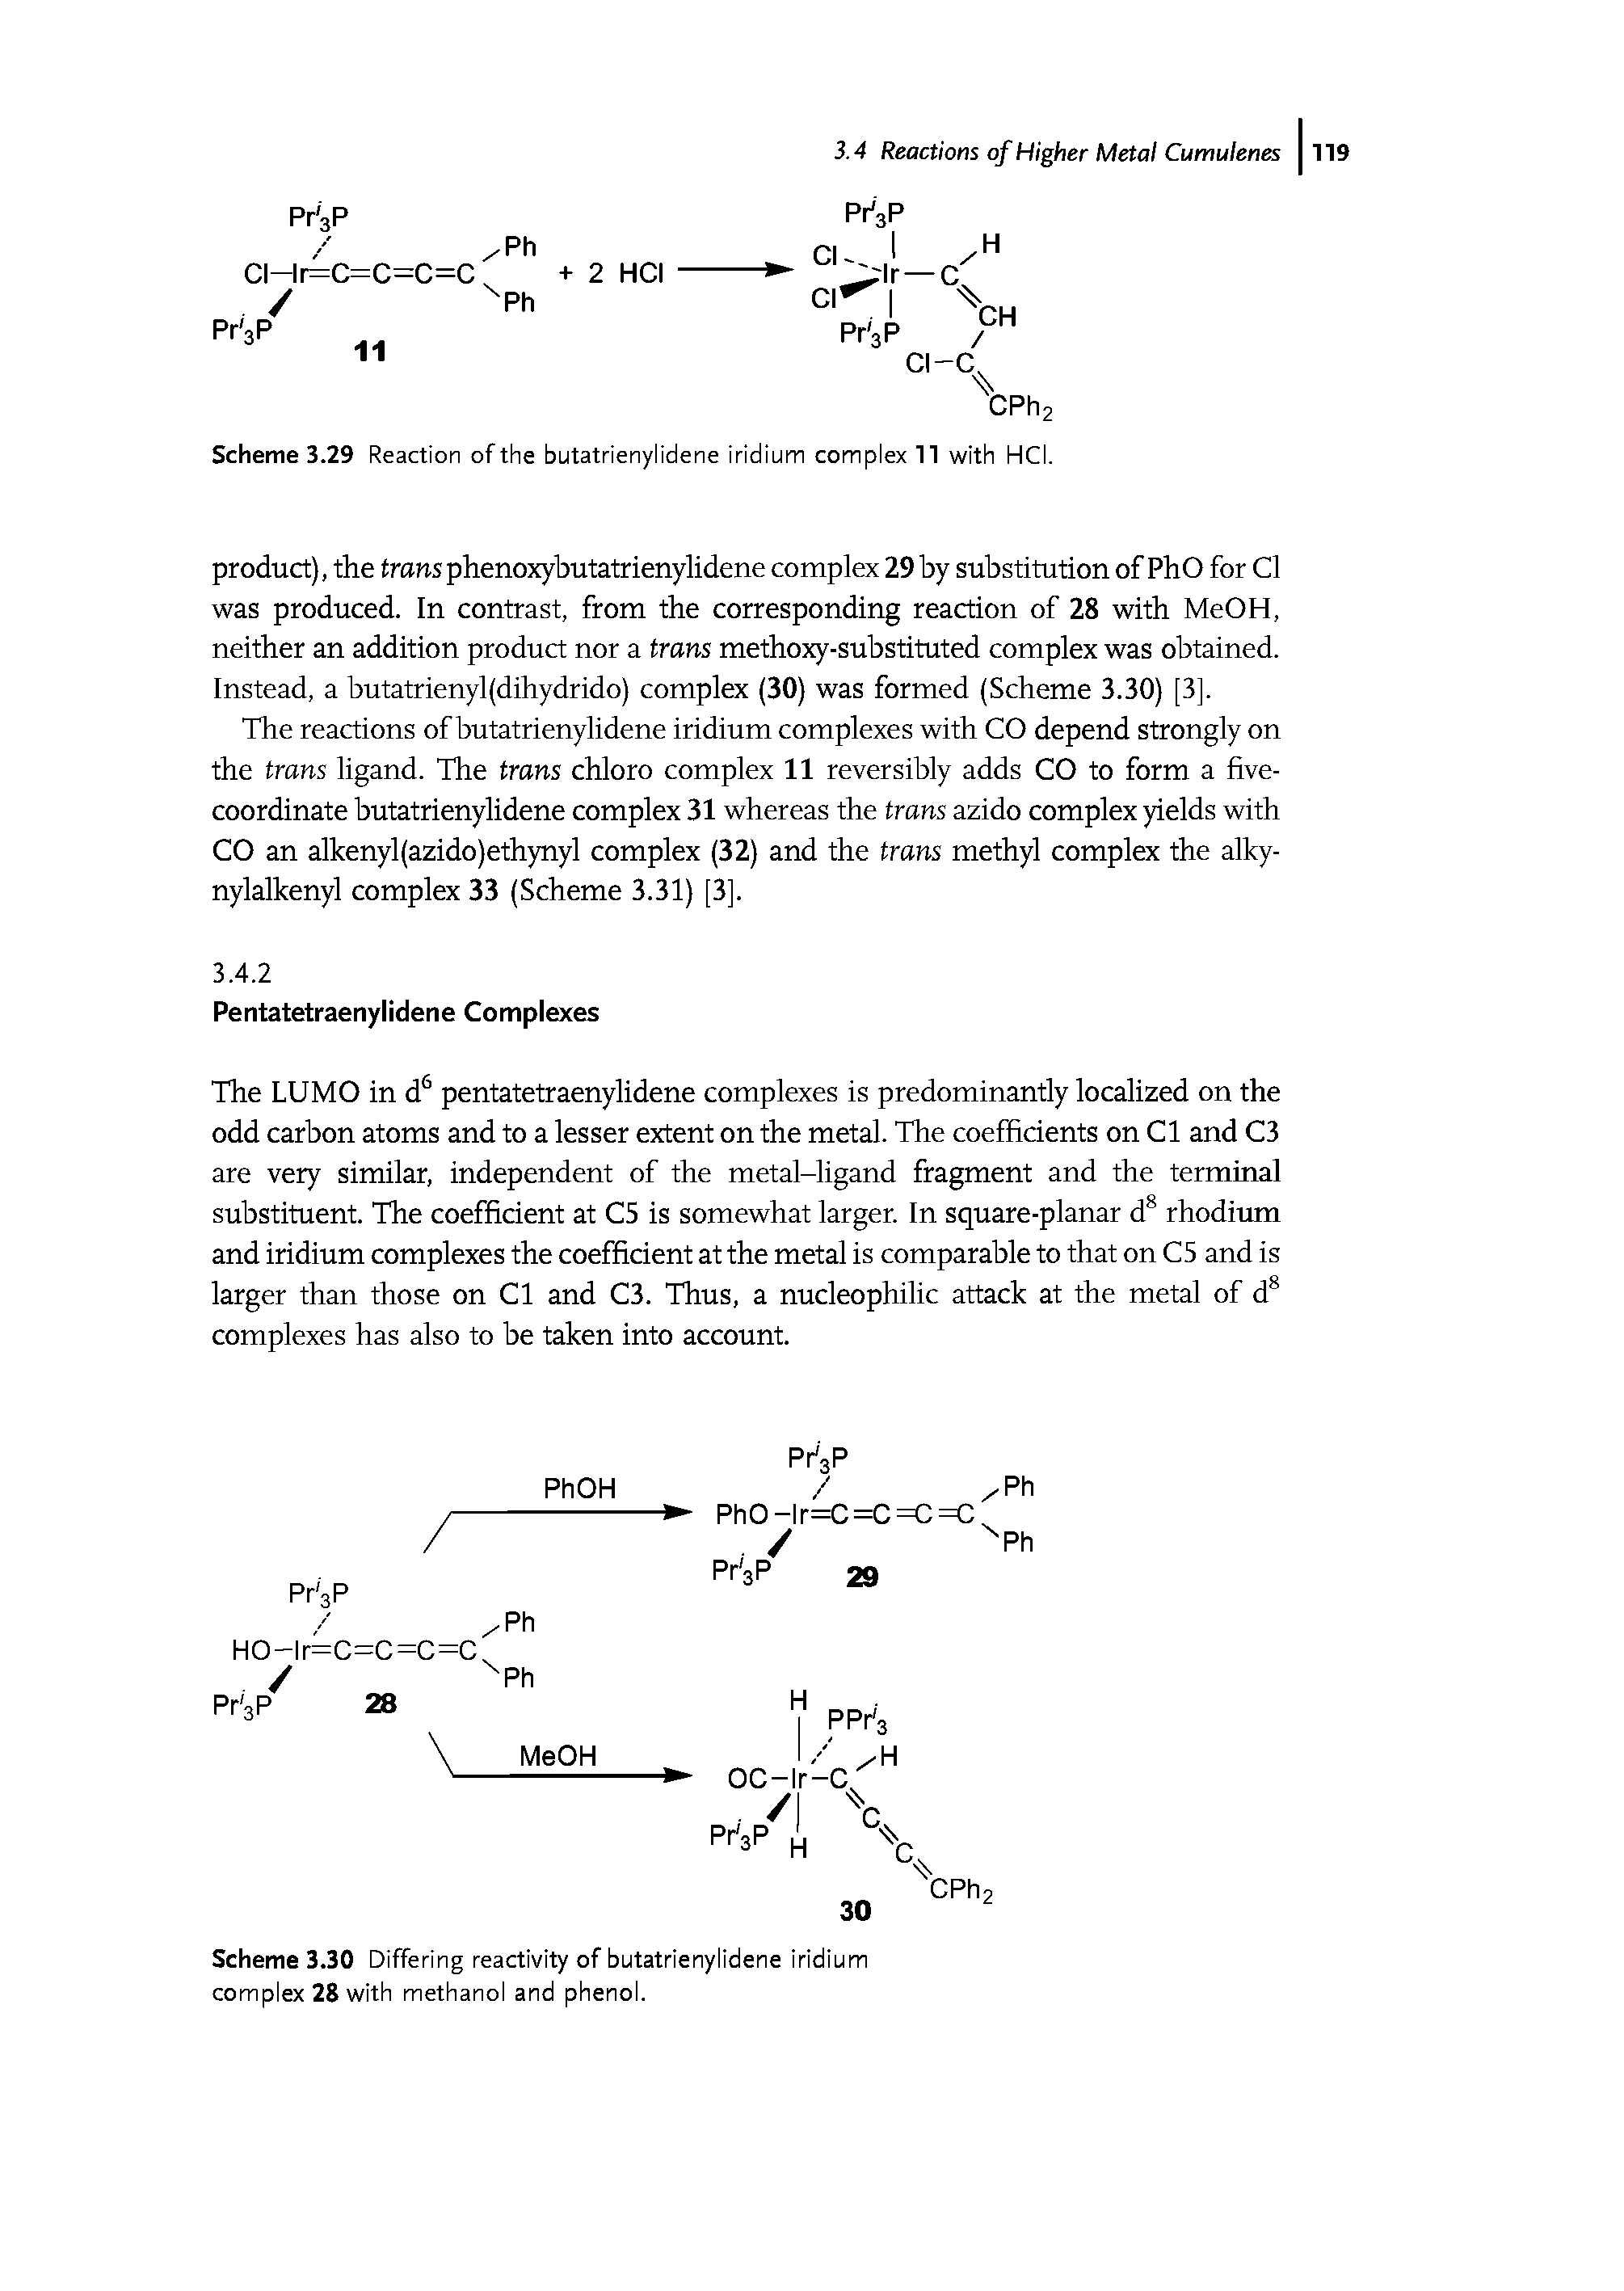 Scheme 3.29 Reaction of the butatrienylidene iridium complex 11 with HCI.